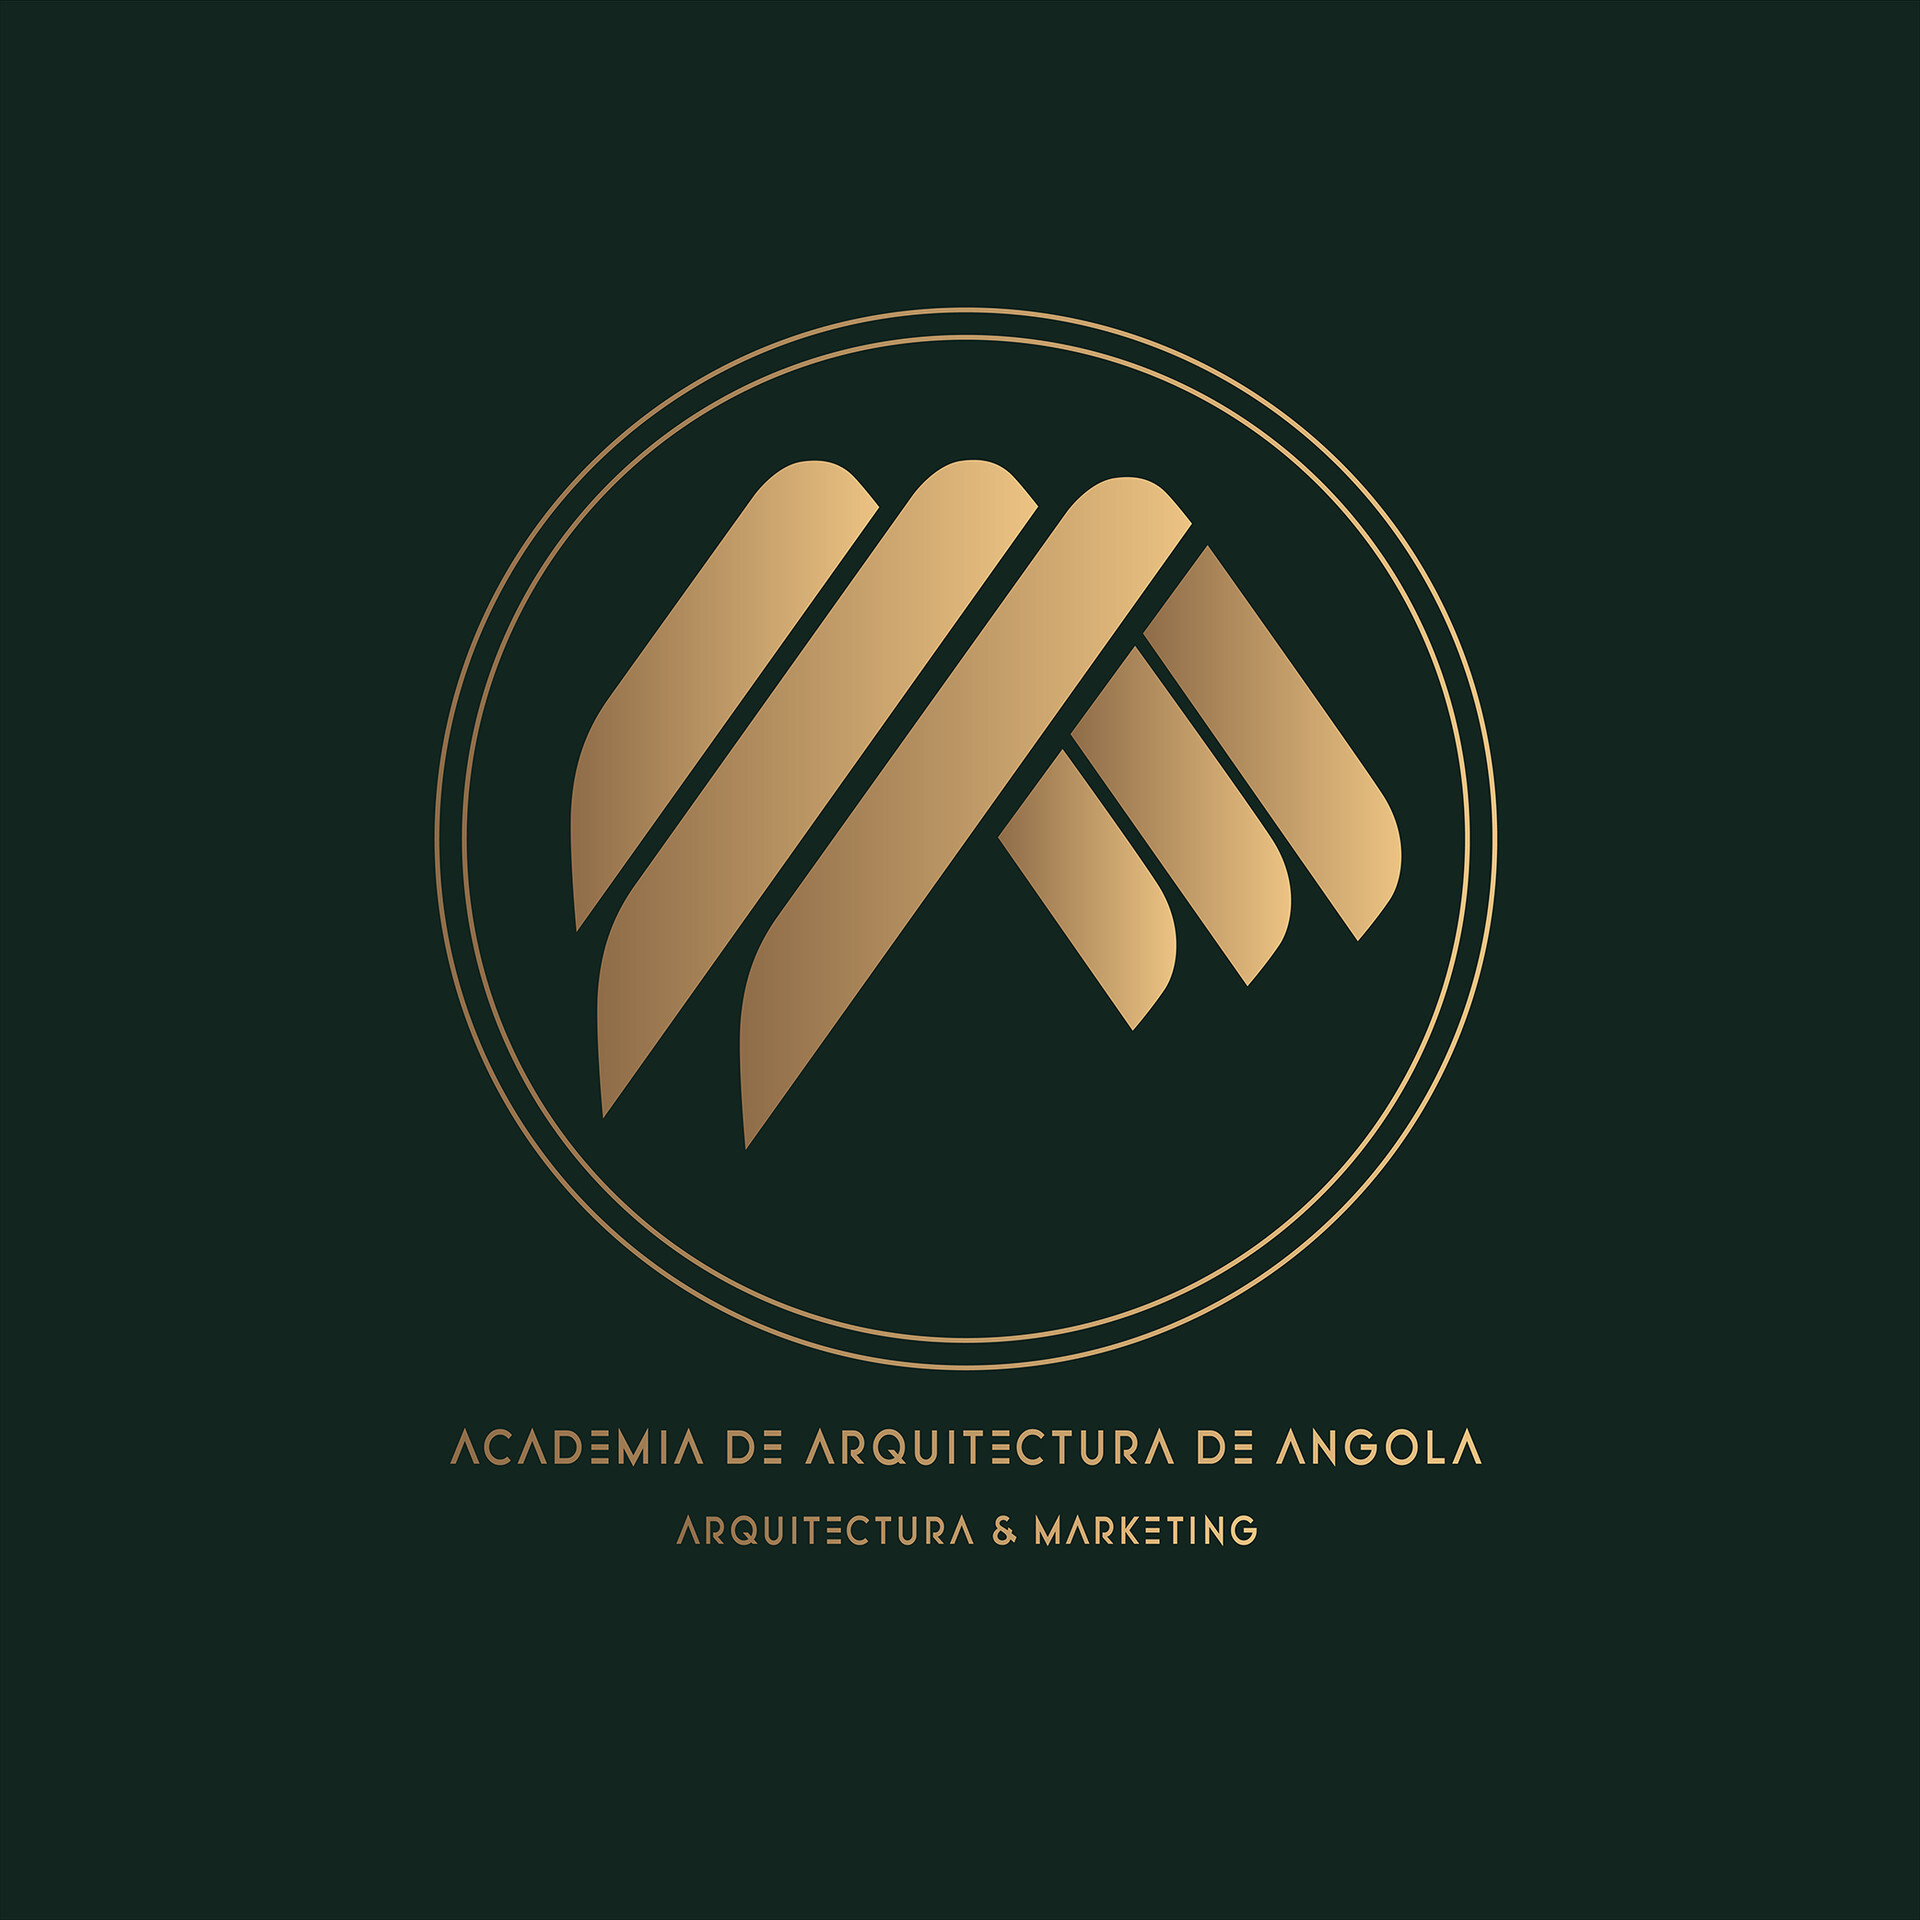 ArtStation - LOGO ACADEMIA DE ARQUITECTURA DE ANGOLA